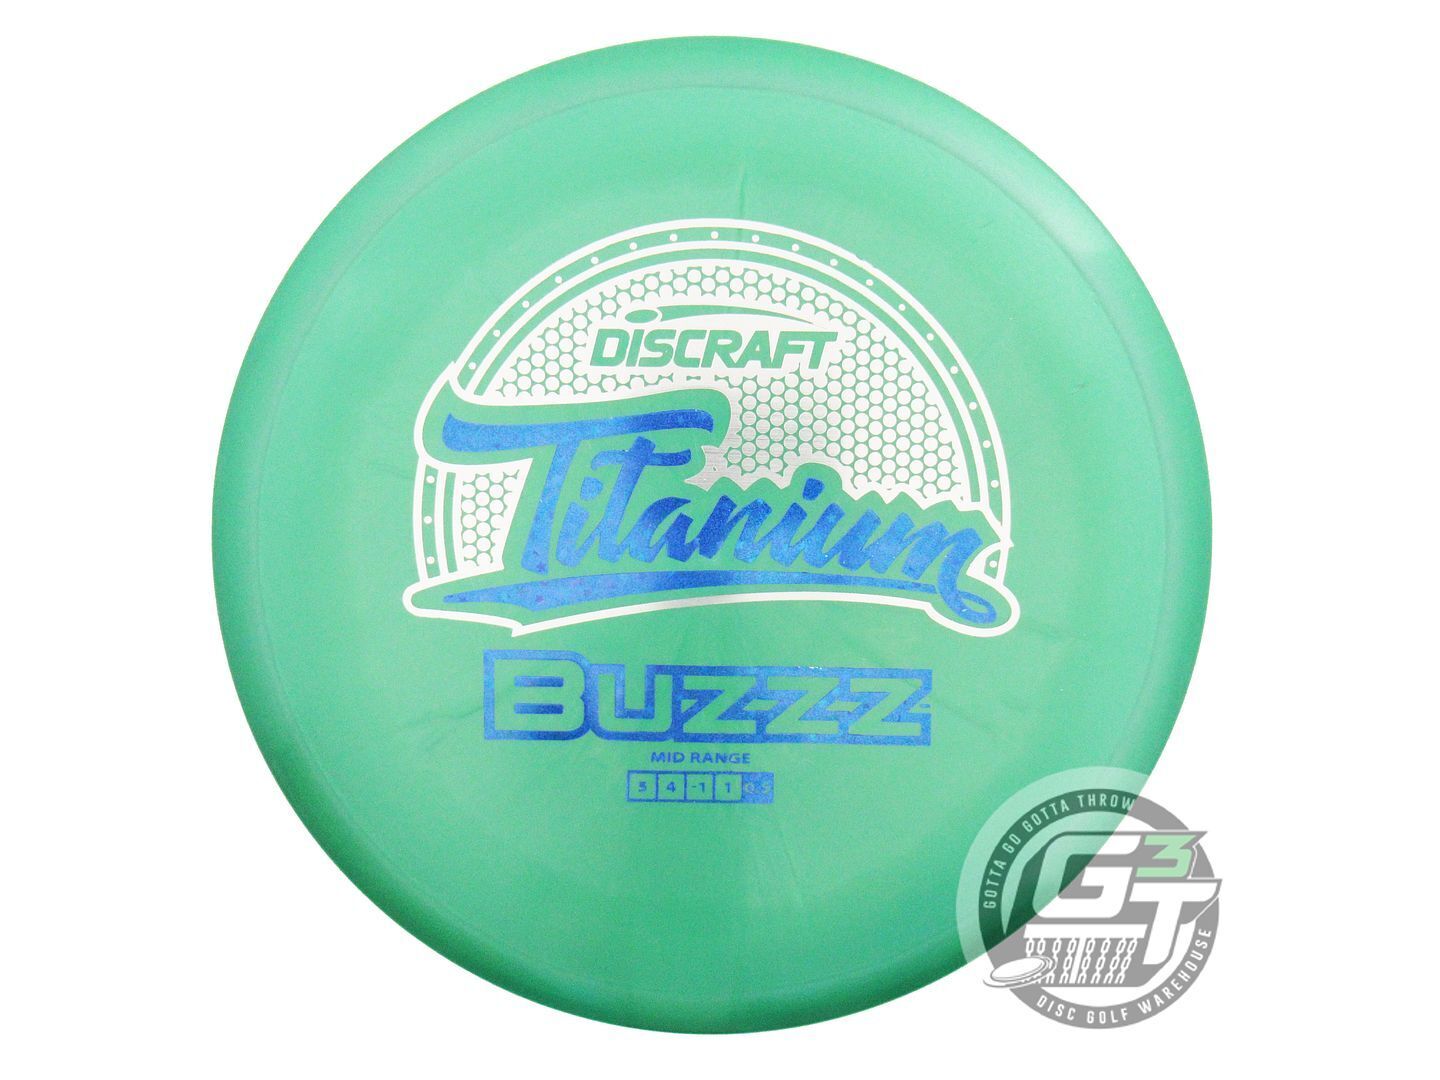 Discraft Titanium Buzzz Midrange Golf Disc (Individually Listed)